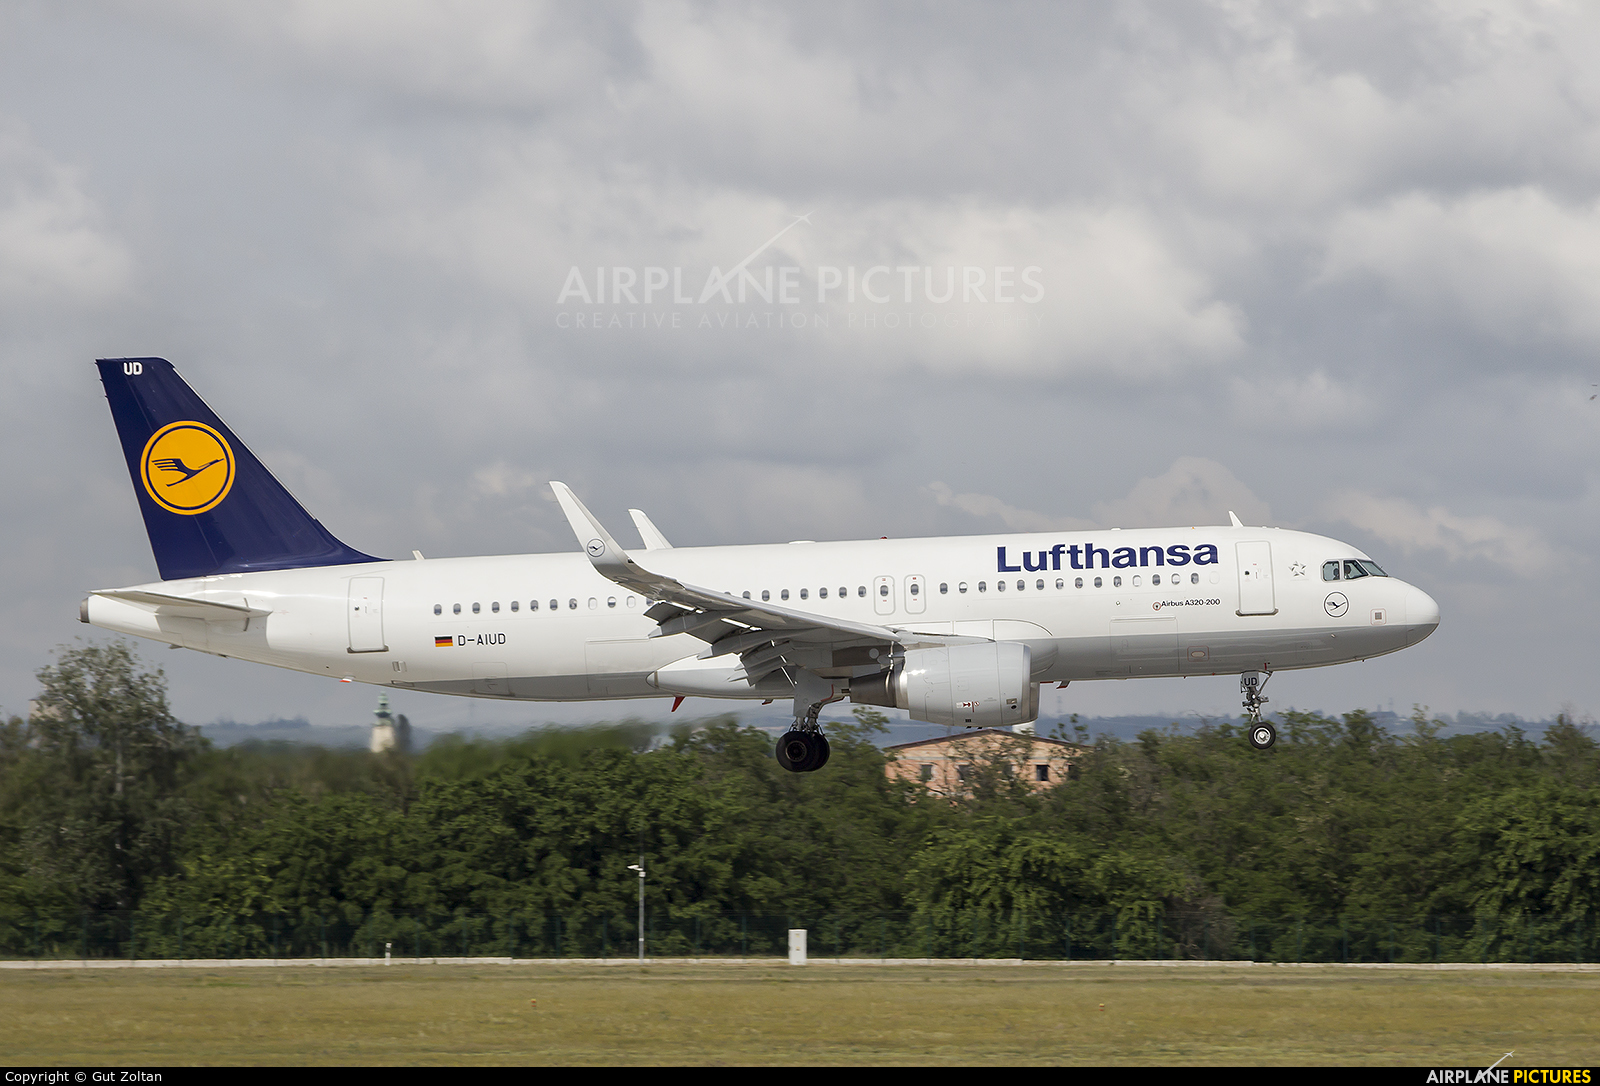 Lufthansa D-AIUD aircraft at Budapest Ferenc Liszt International Airport